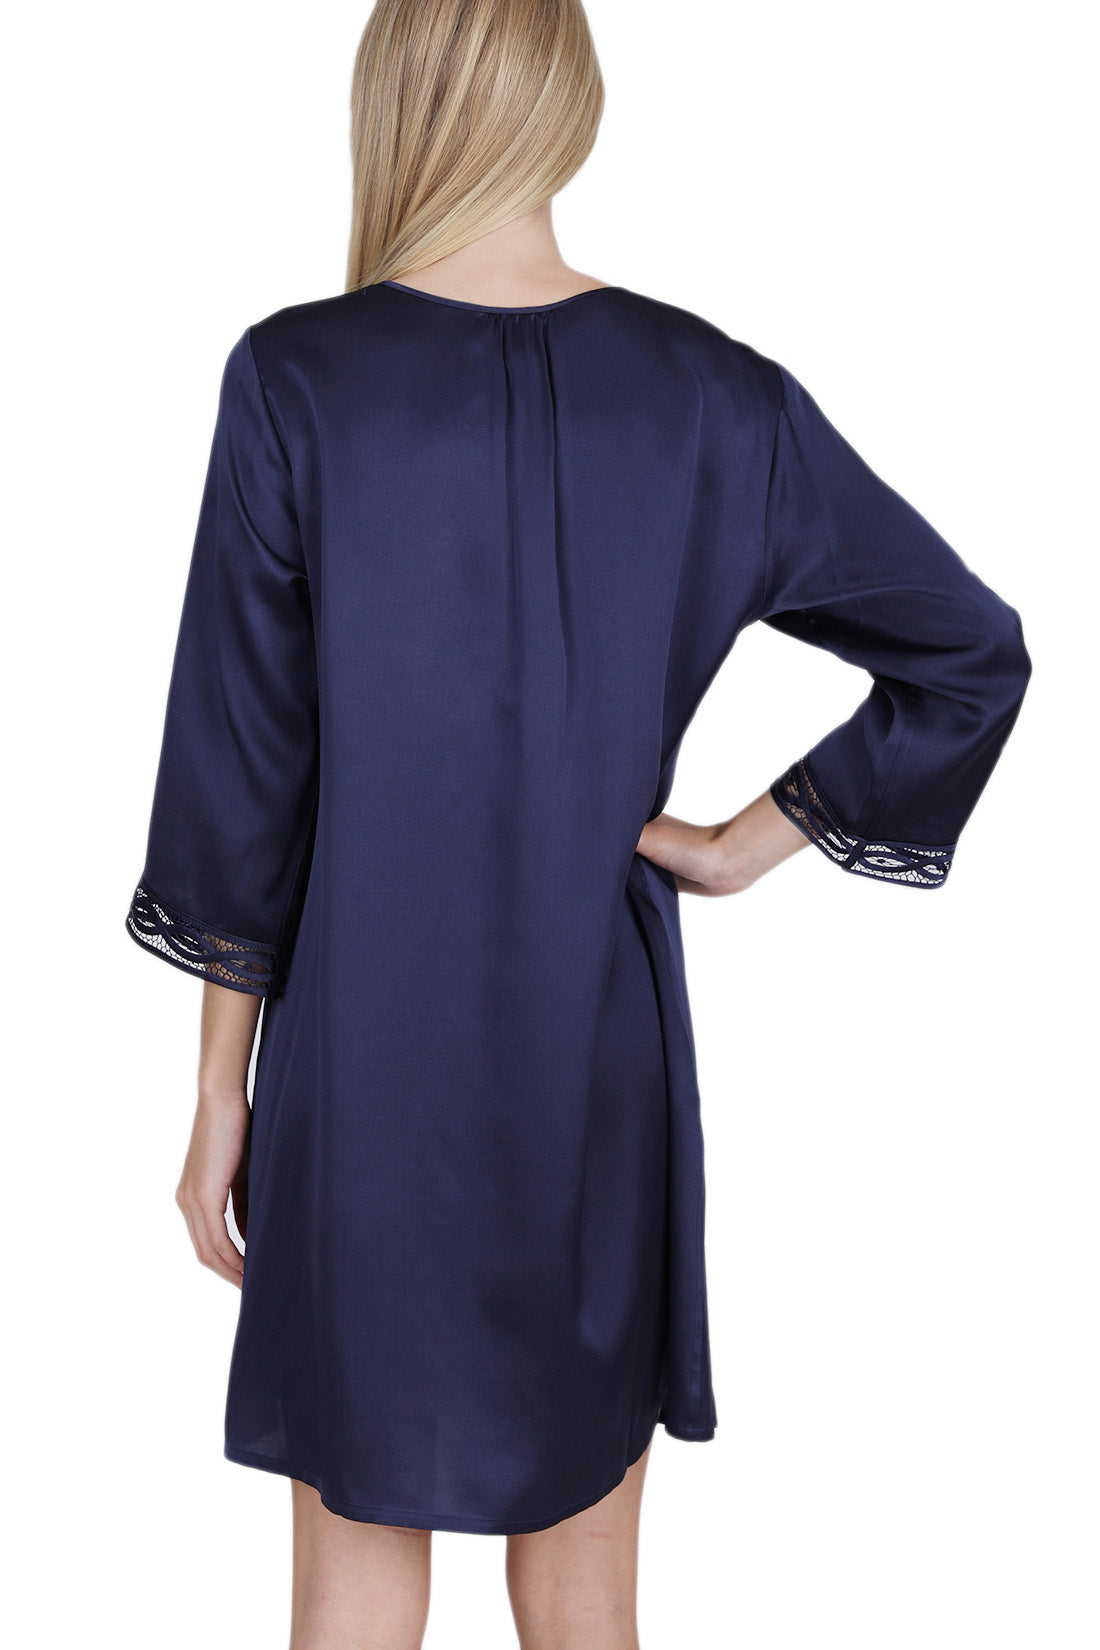 Women's 100% Silk Nightgown with Handmade Lace -OSCAR ROSSA